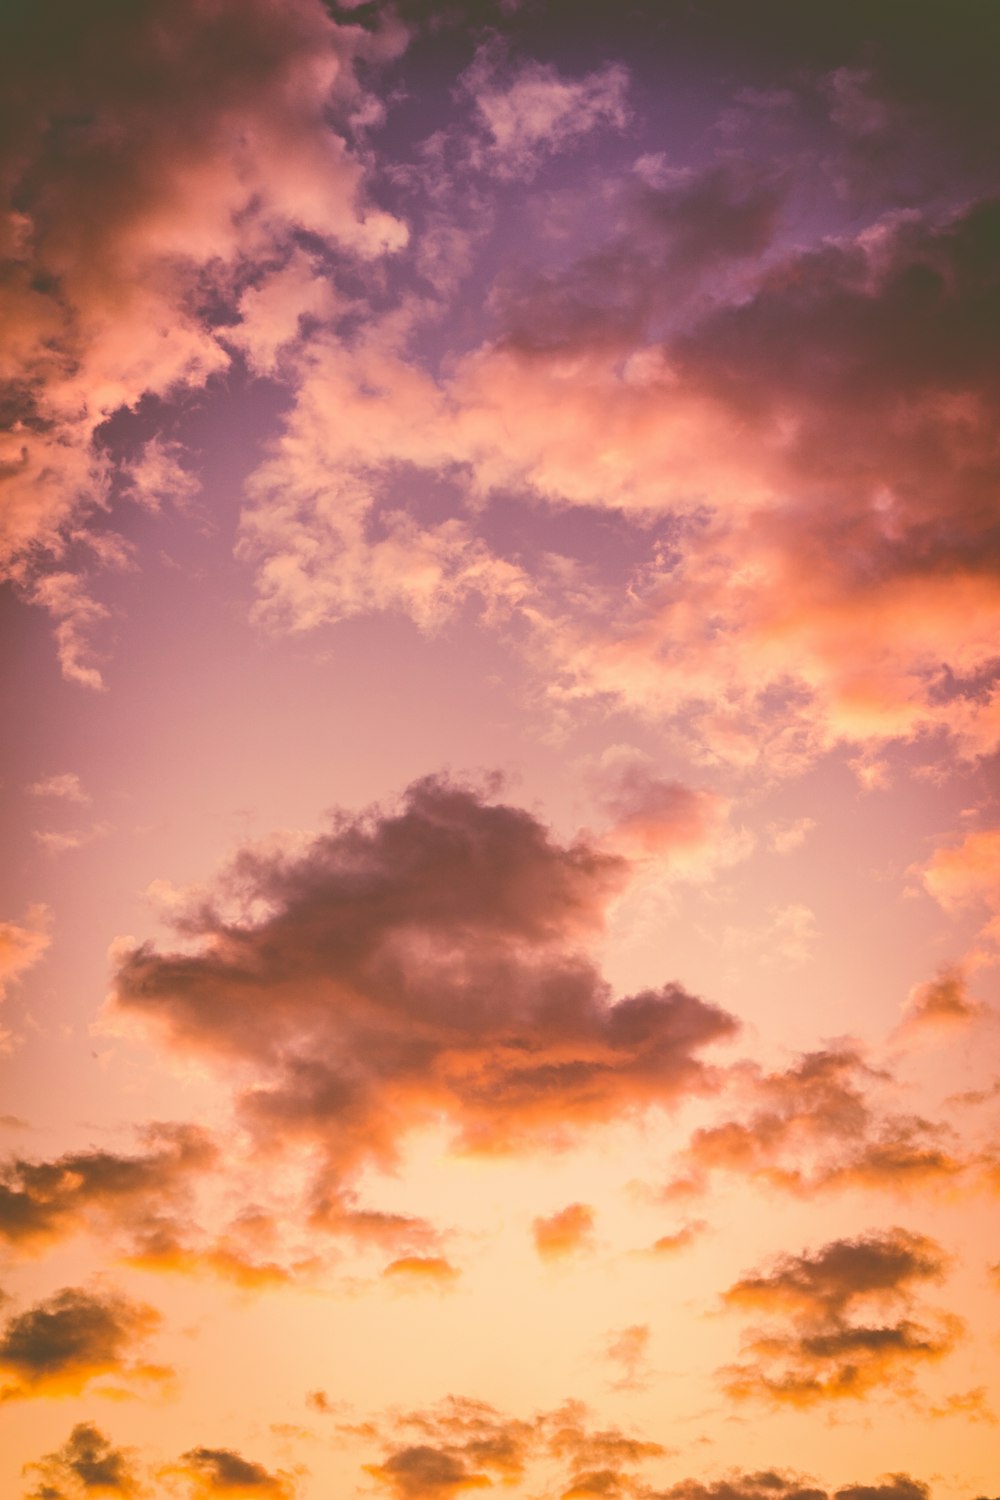 Sunset Images Stunning Download Free Images On Unsplash